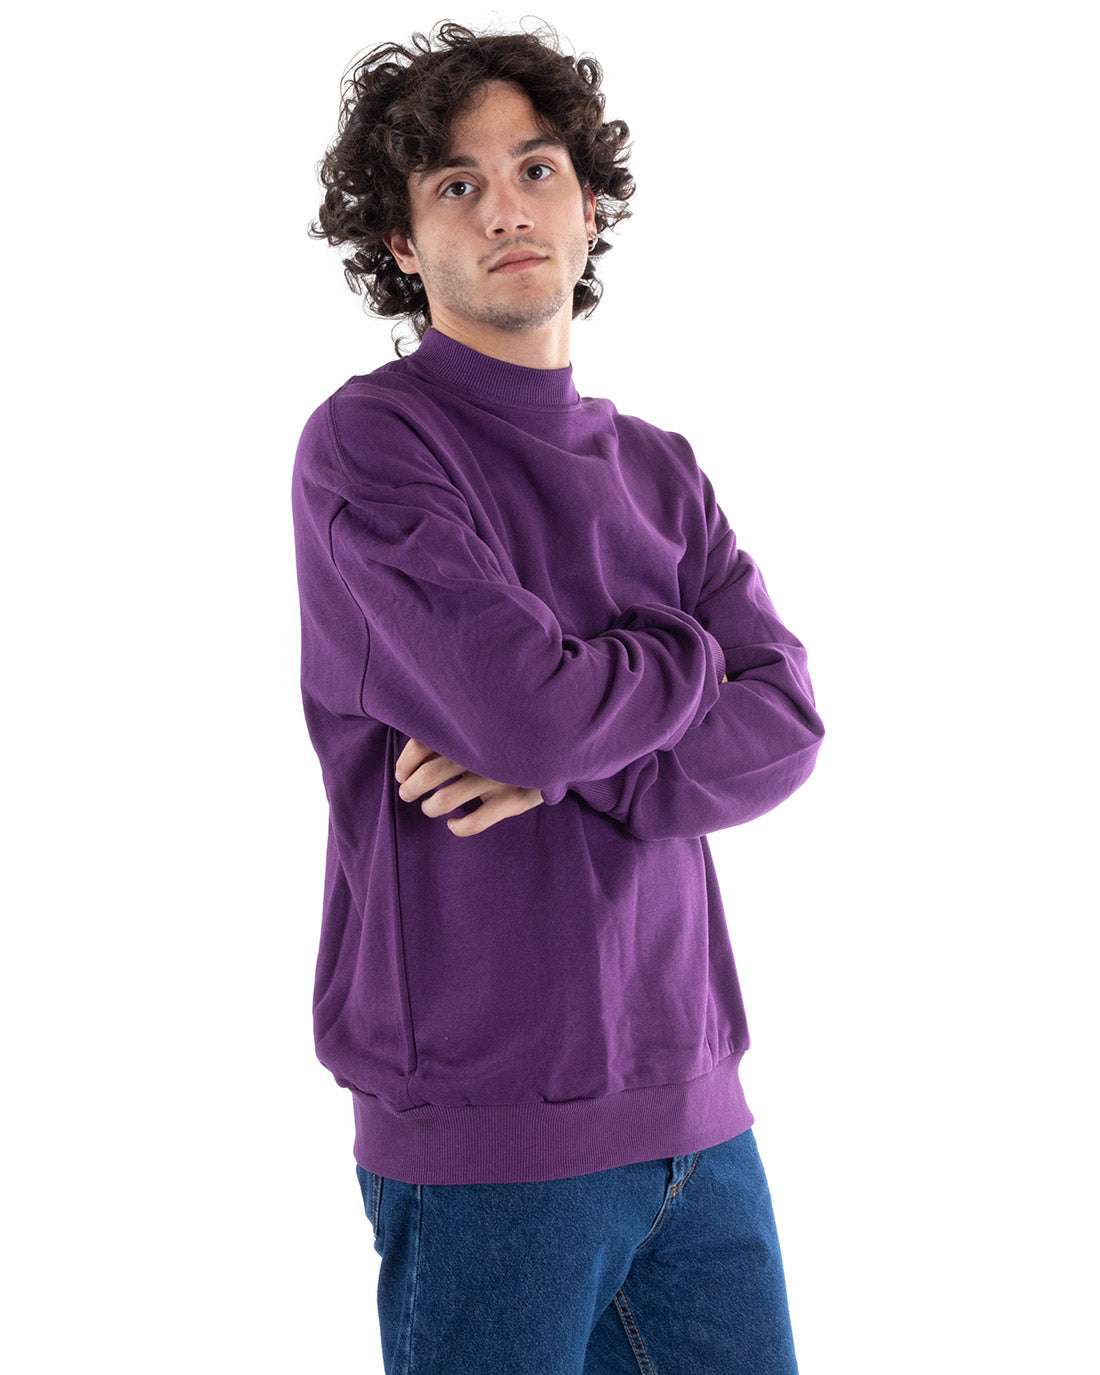 Men's Half-Neck Sweatshirt Purple Comfortable Collar Sweatshirt GIOSAL-F2944A